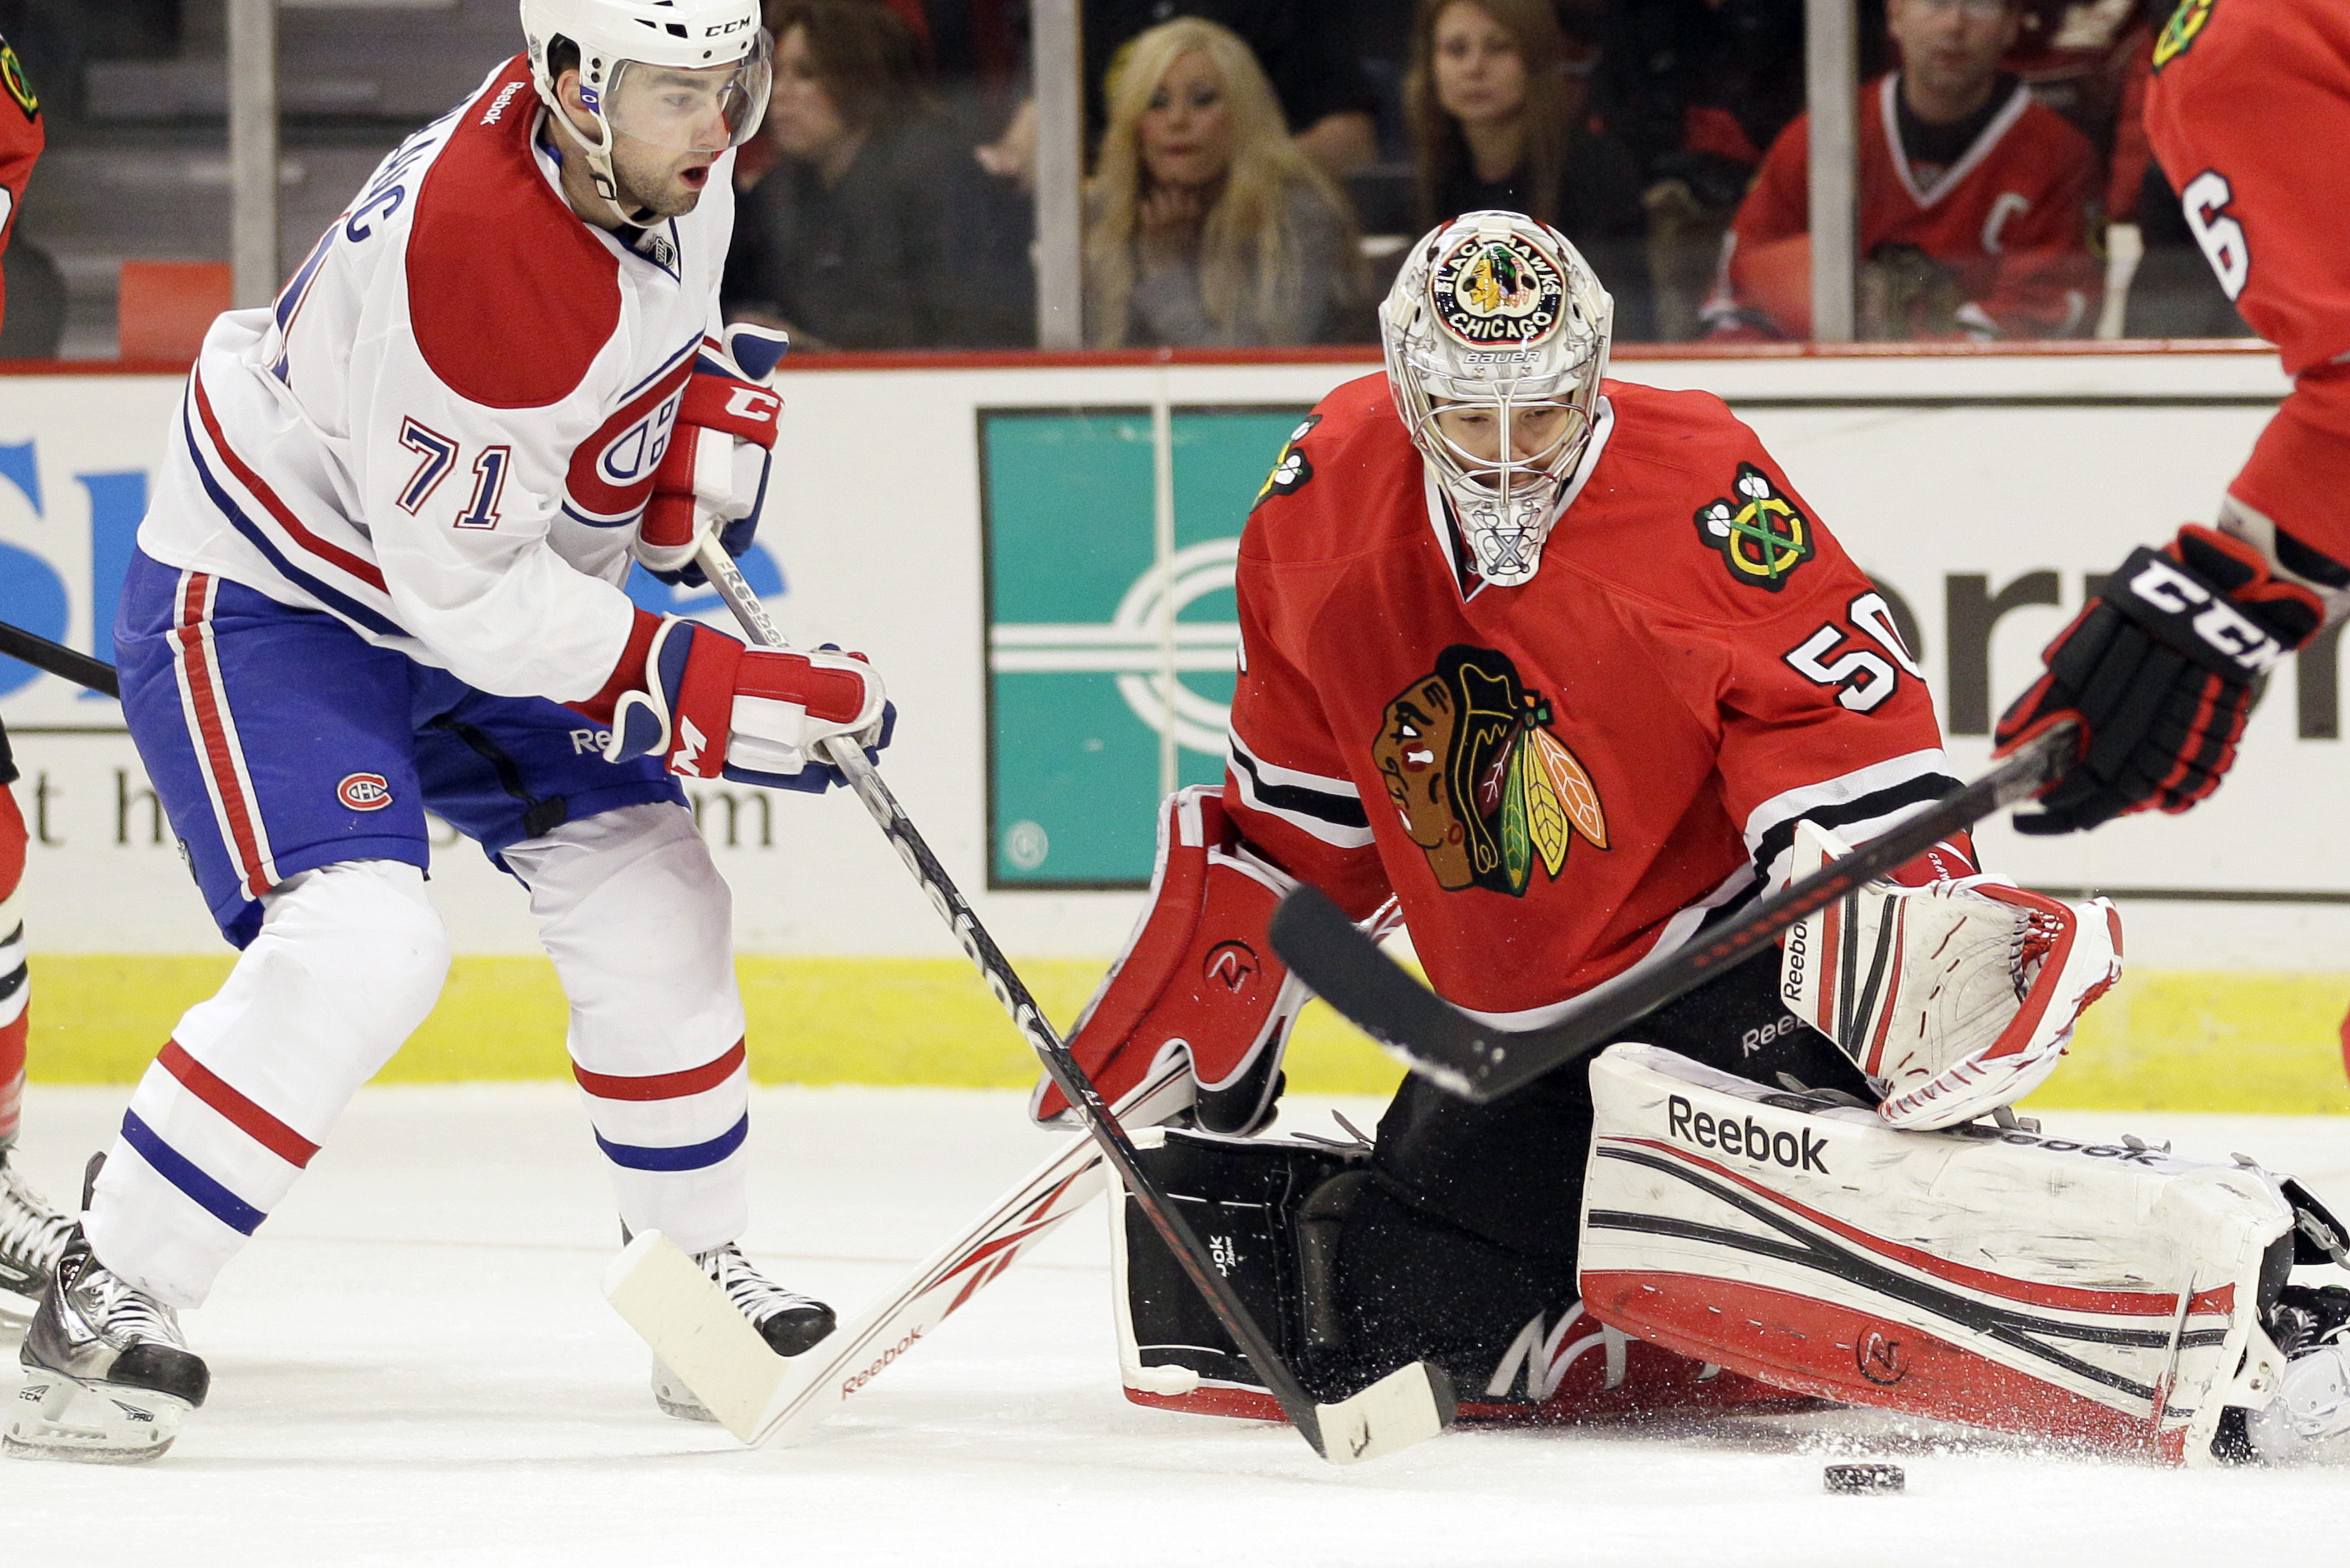 Devils goalie Corey Crawford retires from NHL